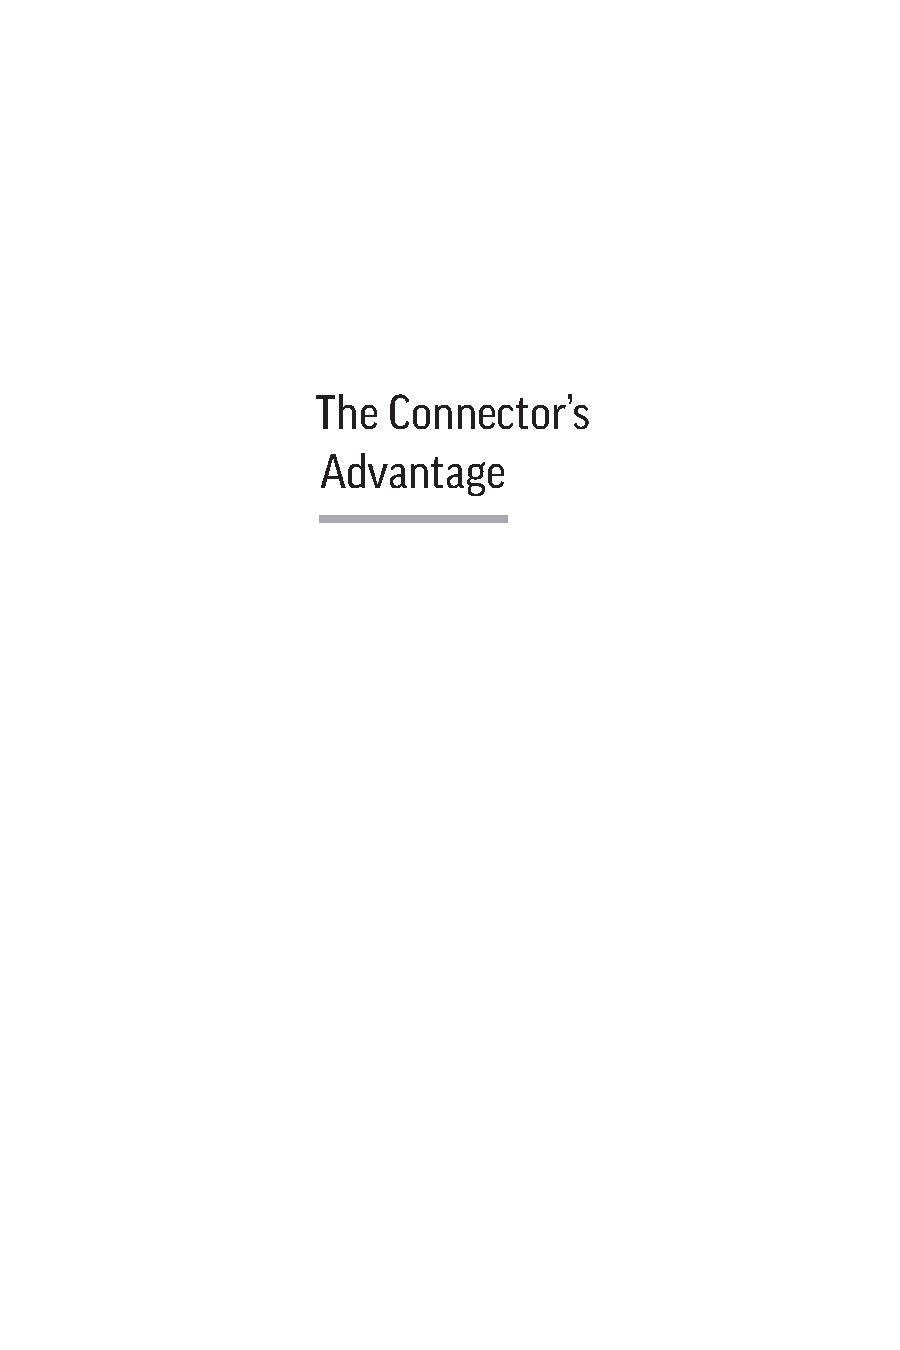 The Connector's Advantage